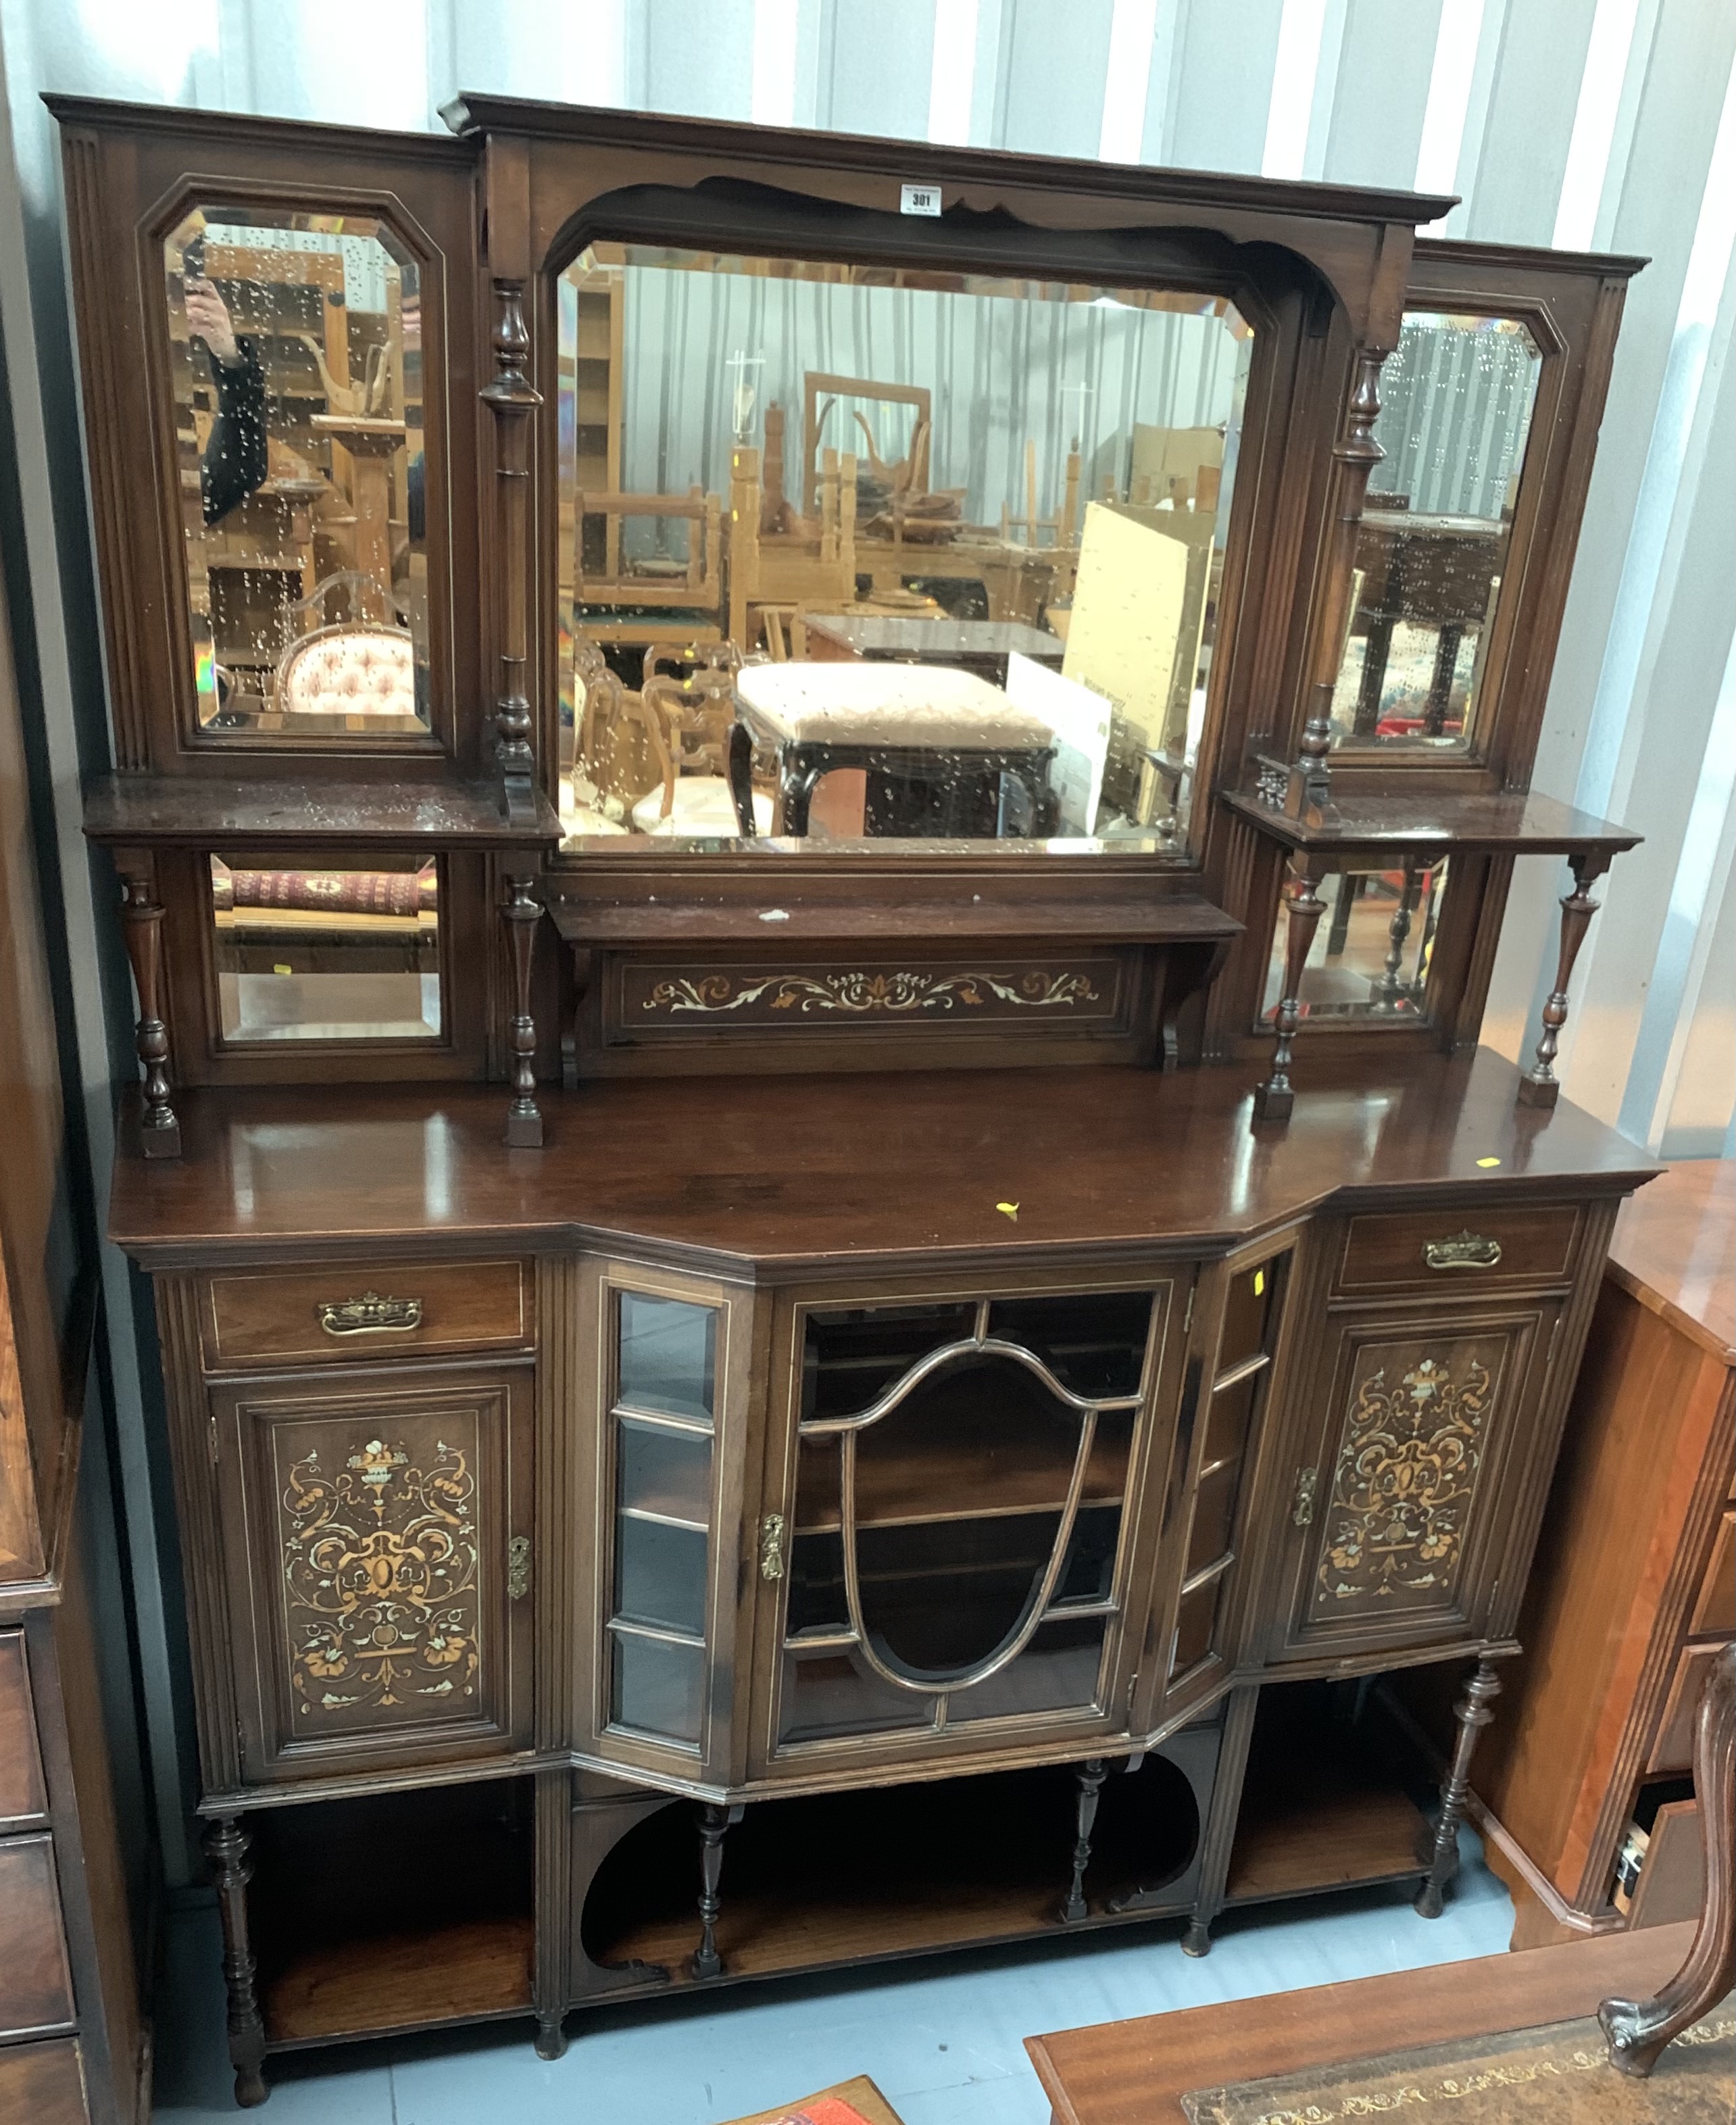 Inlaid antique mirrorback cabinet. 75” high, 60” wide, 18” depth